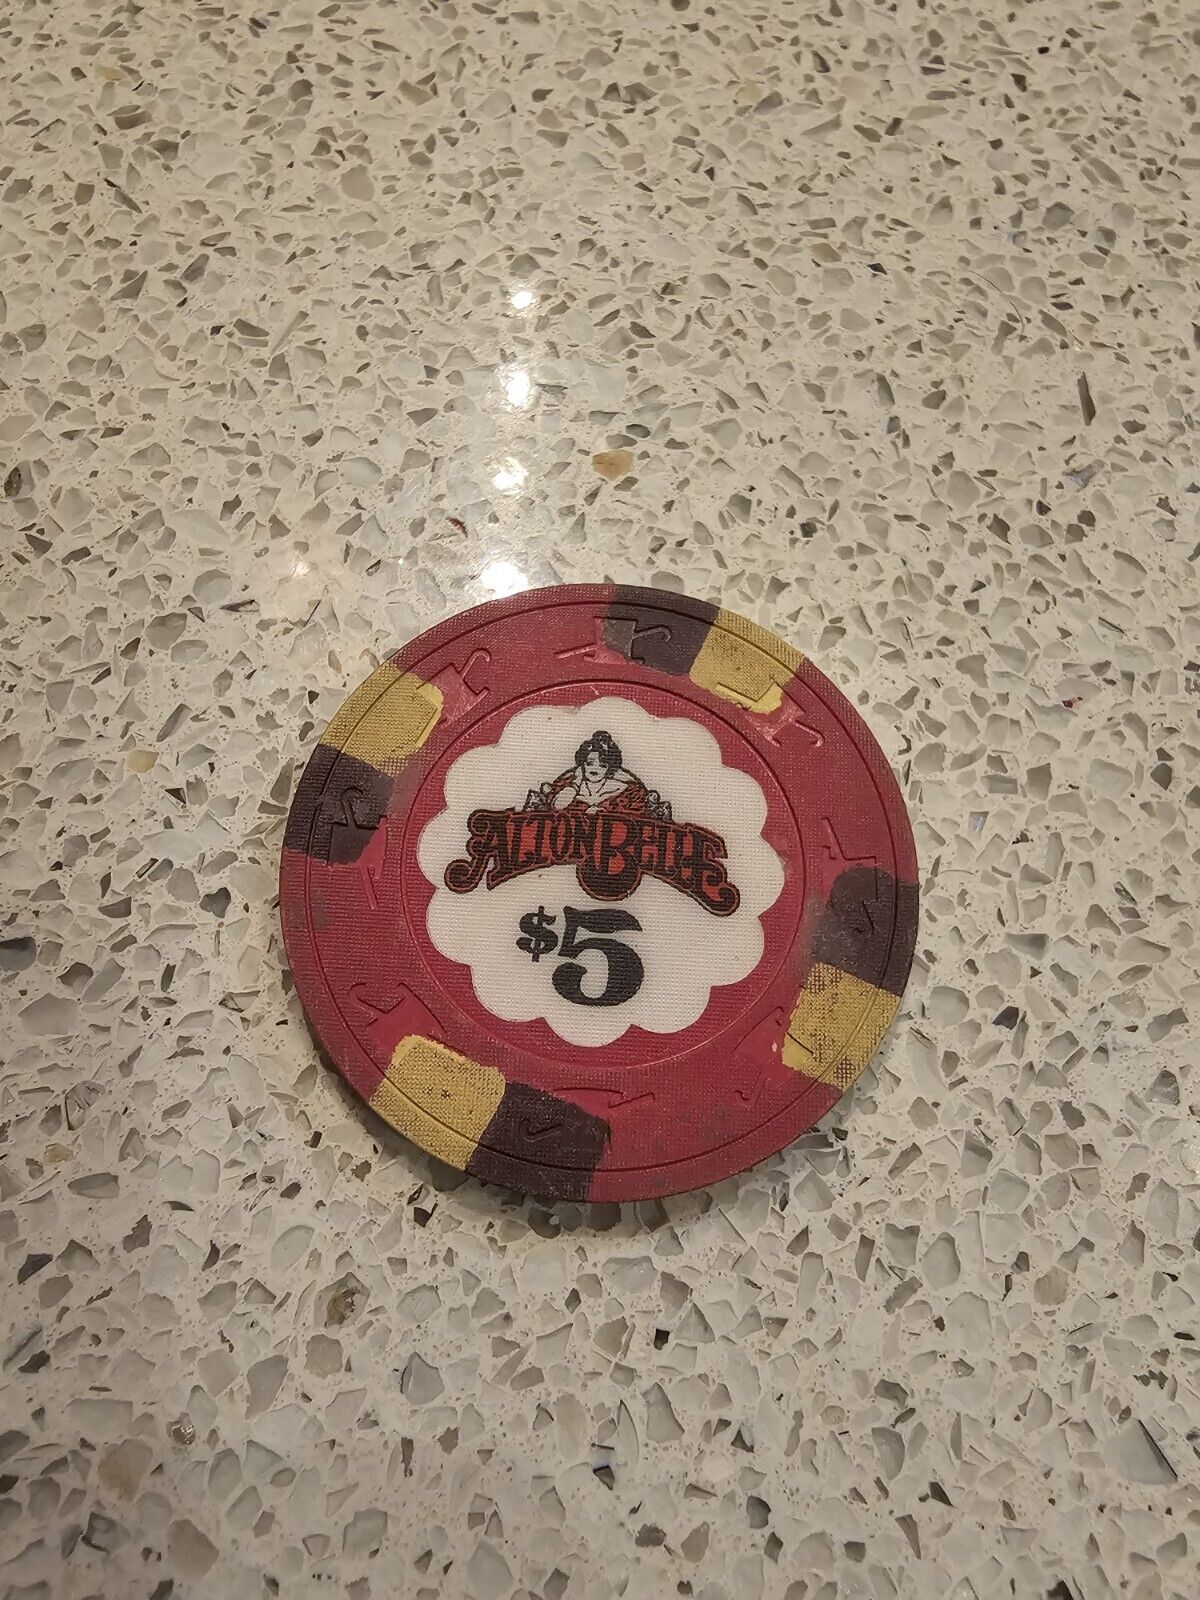 5.00 Chip from the Alton Belle Casino Alton Illinois H&C